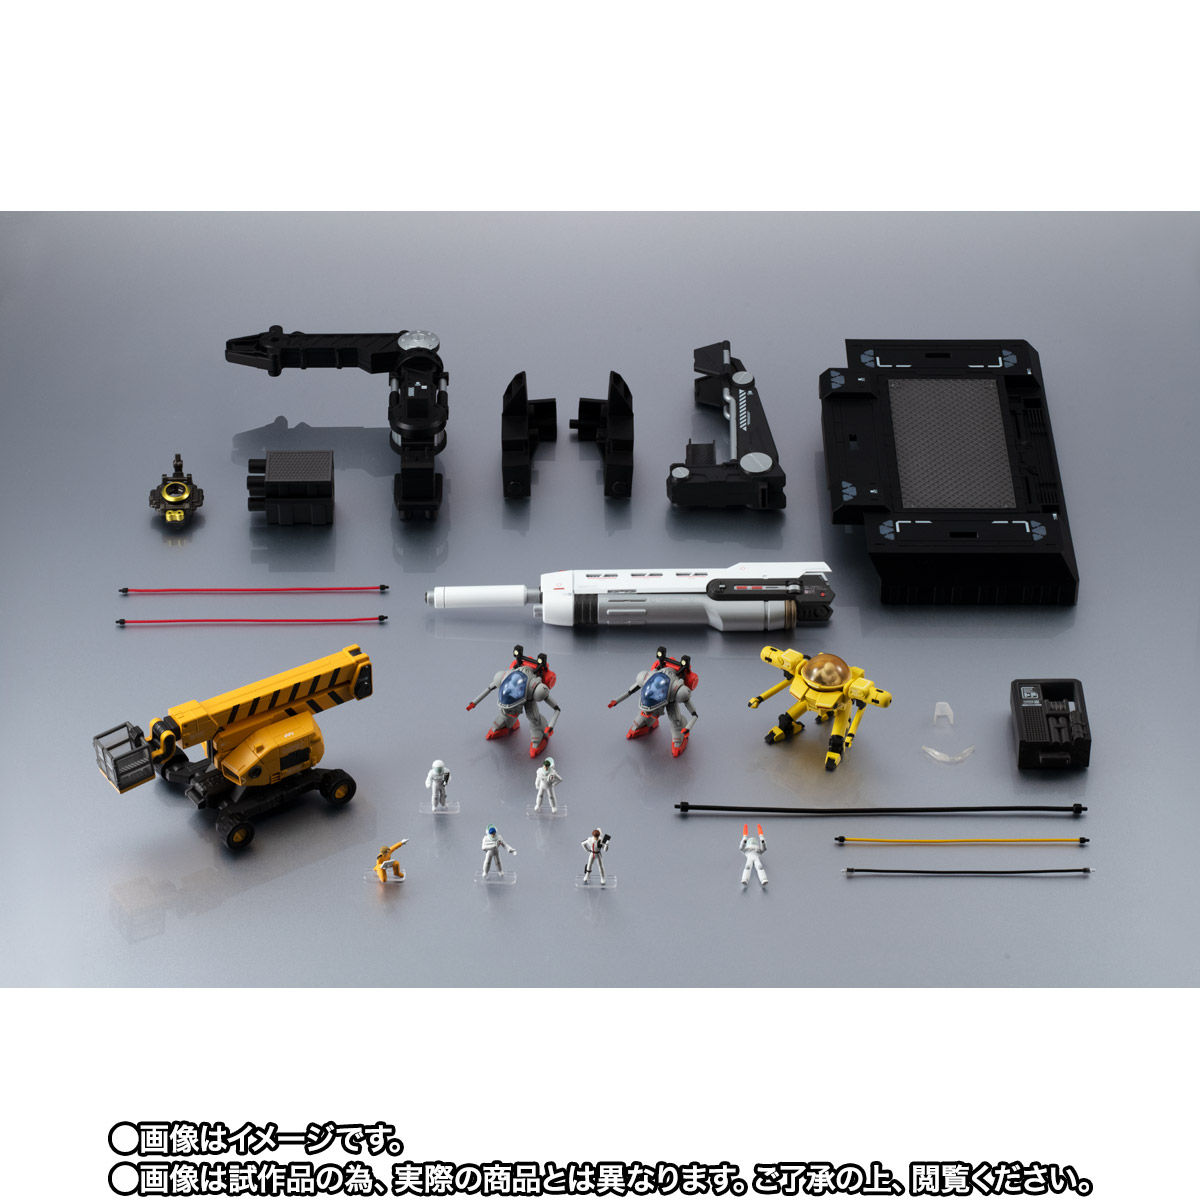 Metal Structure Kaitai-Shou-Ki 1/60 RX-93 ν Gundam Option Parts——Londo Bell Engineers